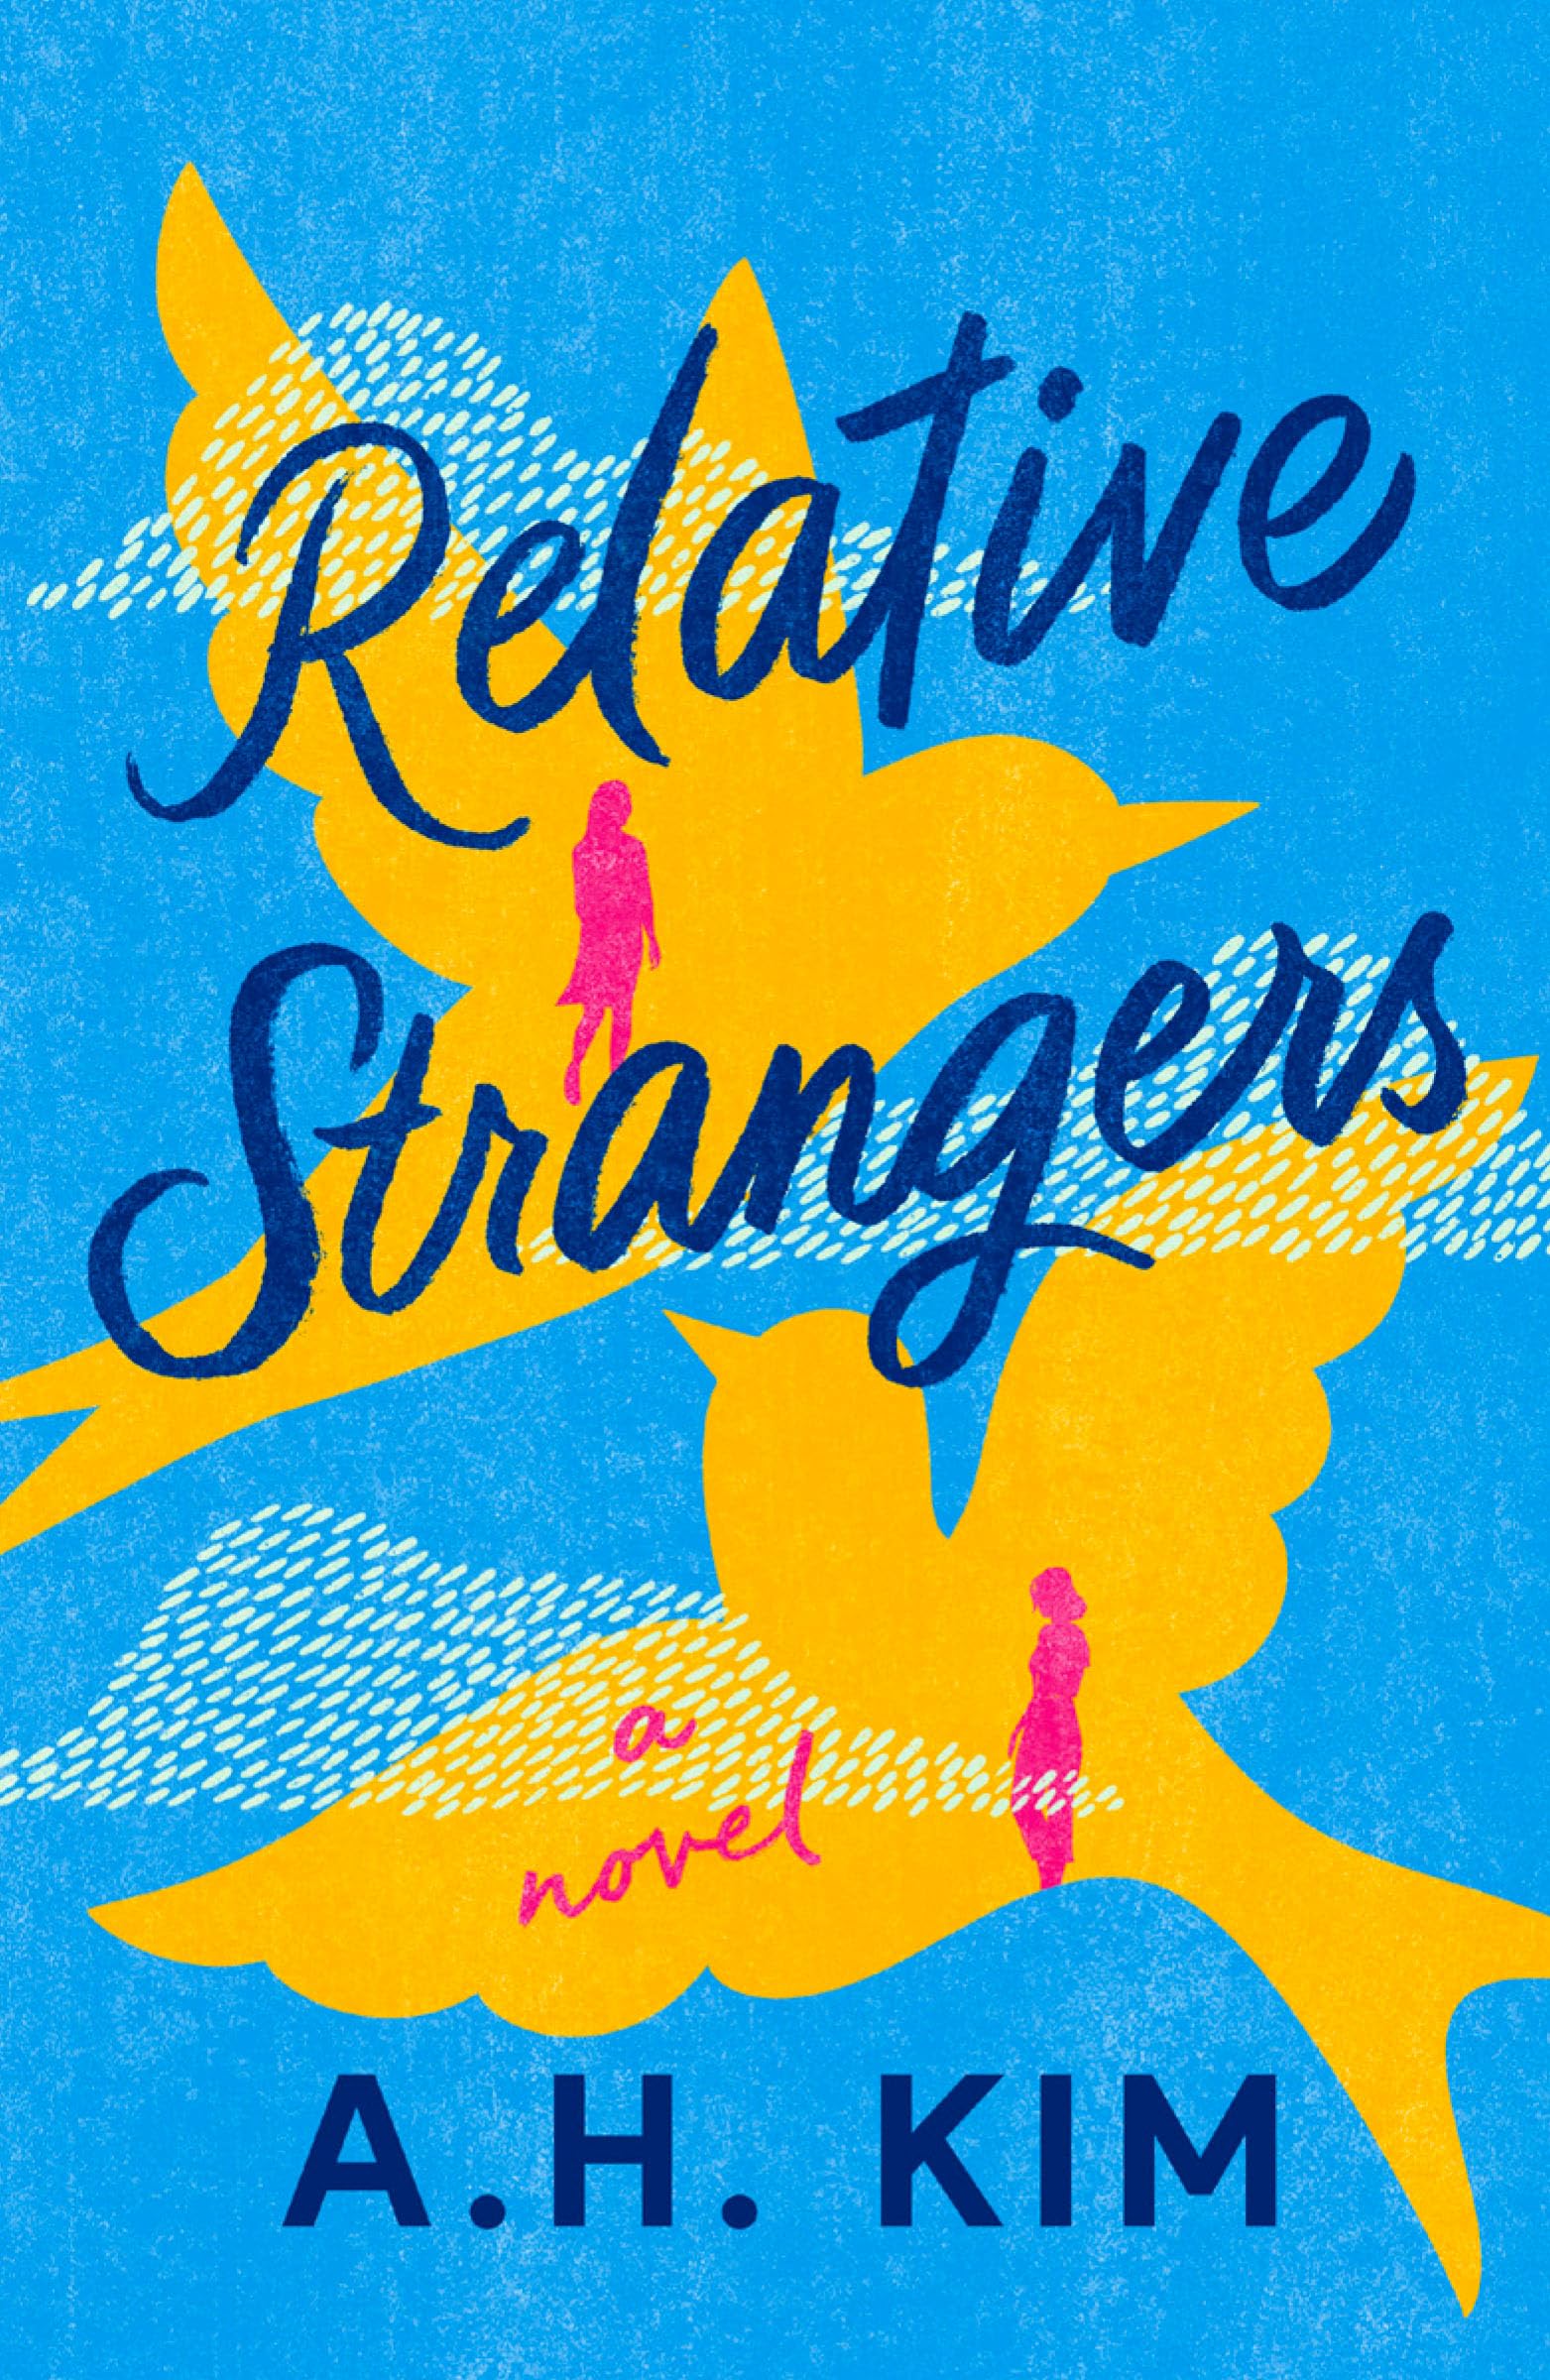 Relative Strangers by A.H. Kim